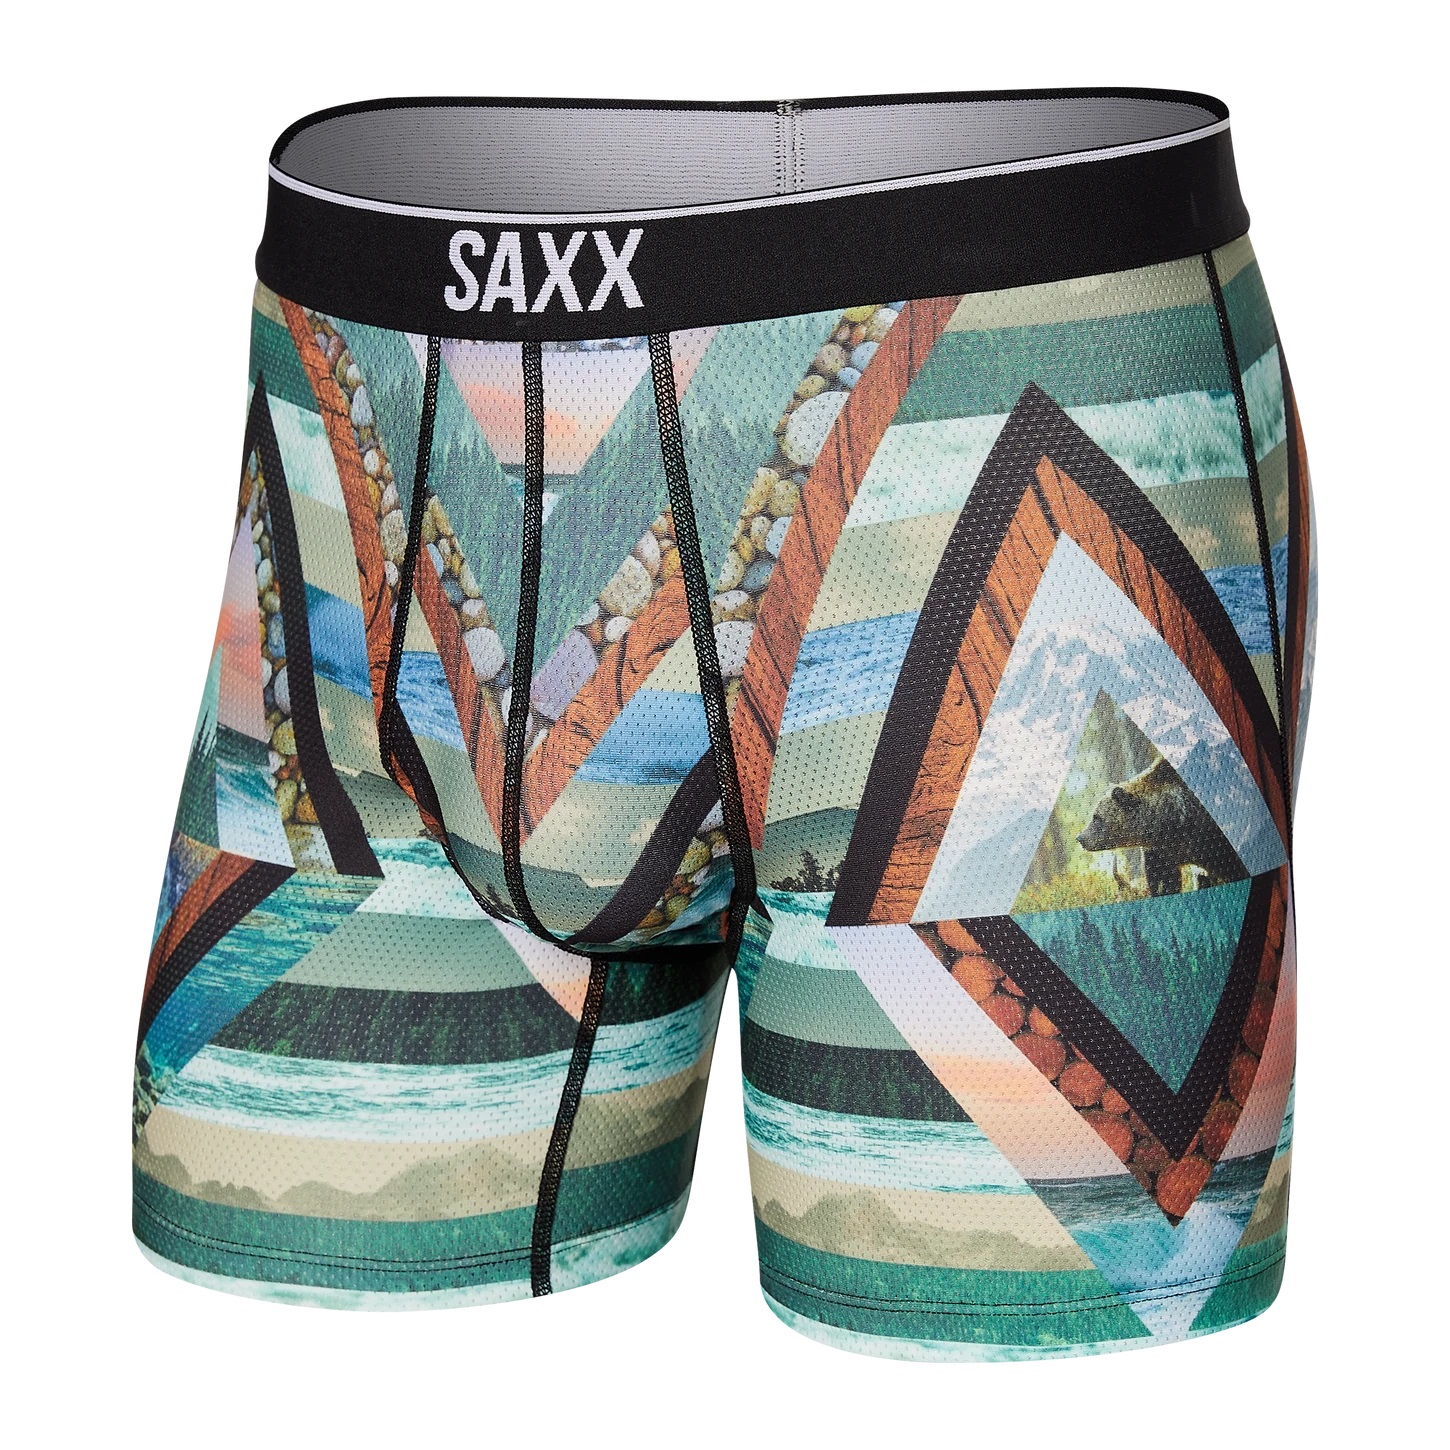 Saxx Men's Underwear - Volt Breathable Mesh Boxer Brief with Built